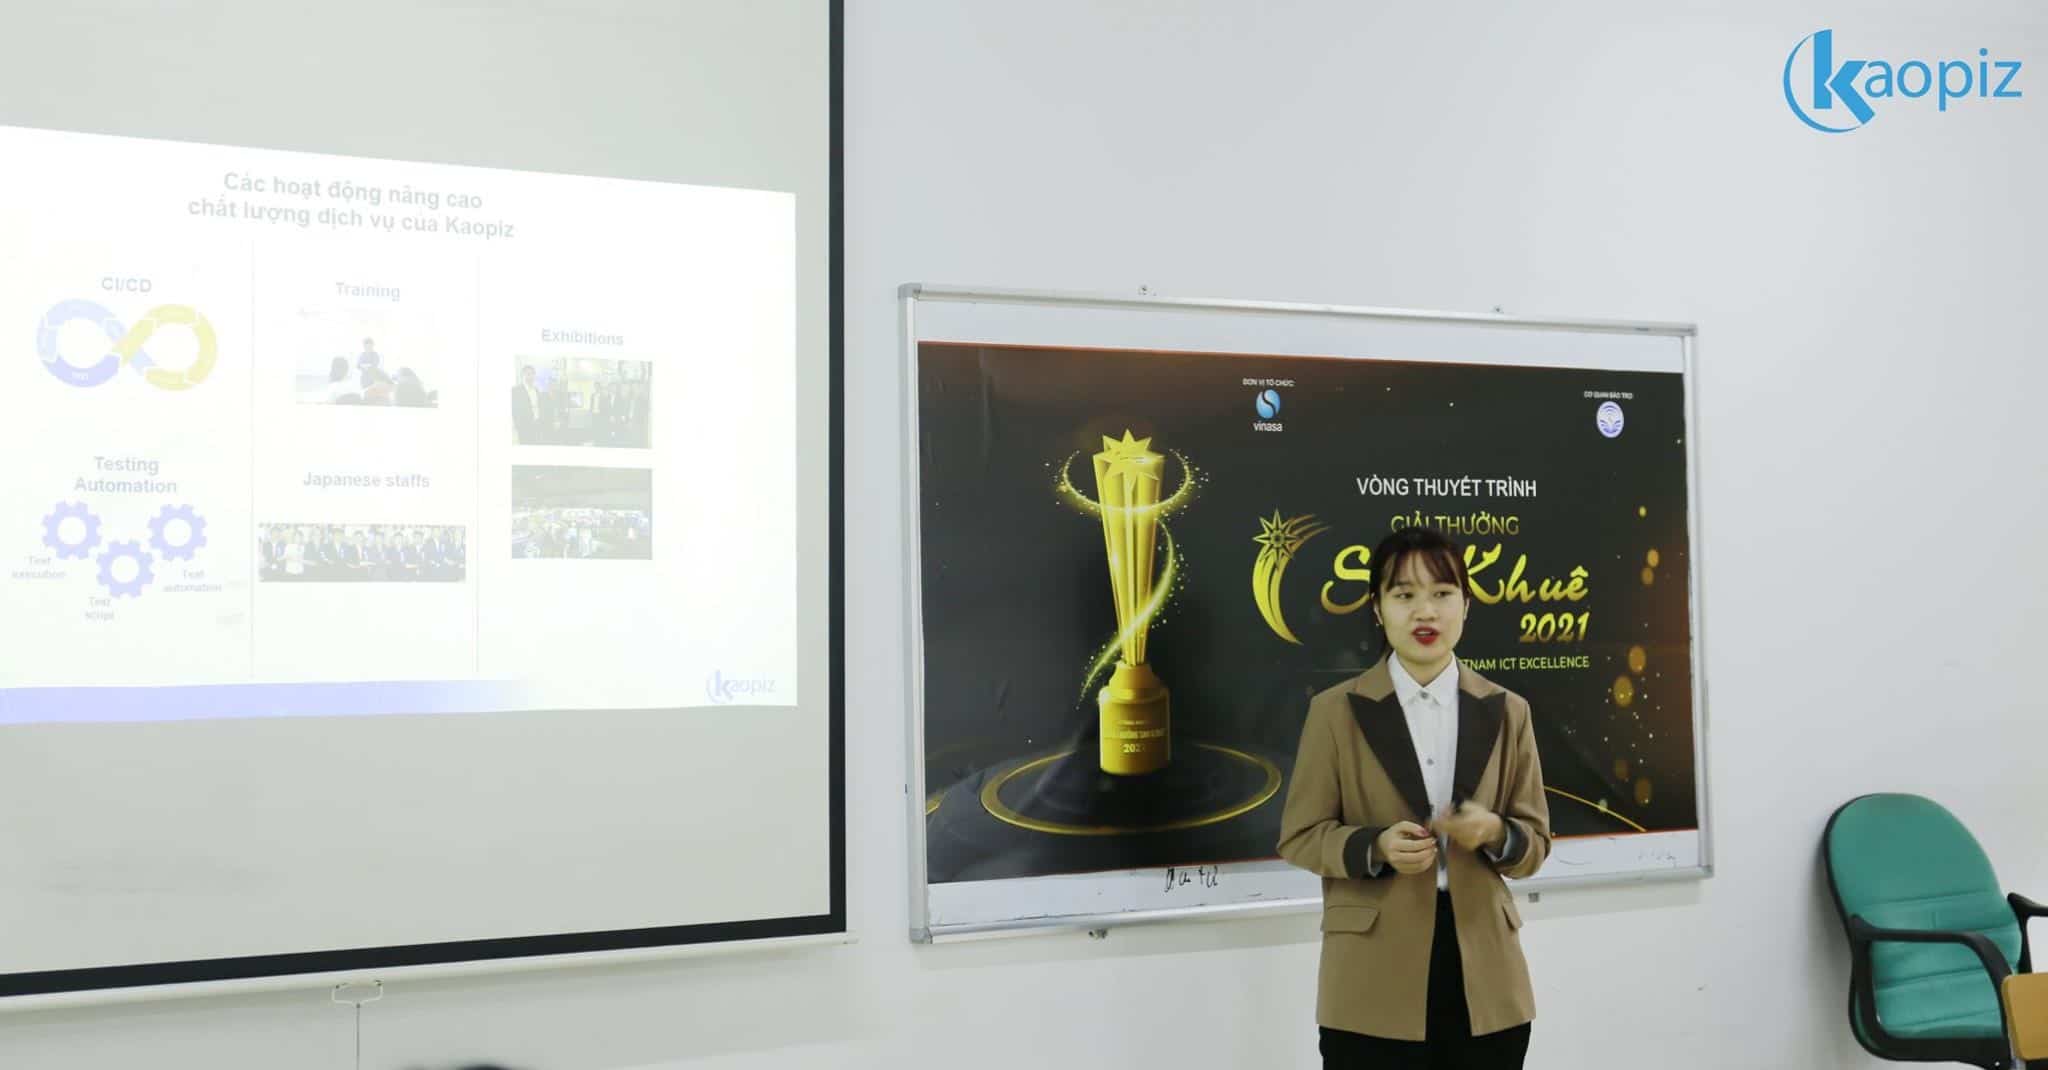 Sao Khue award 2021 presentation day